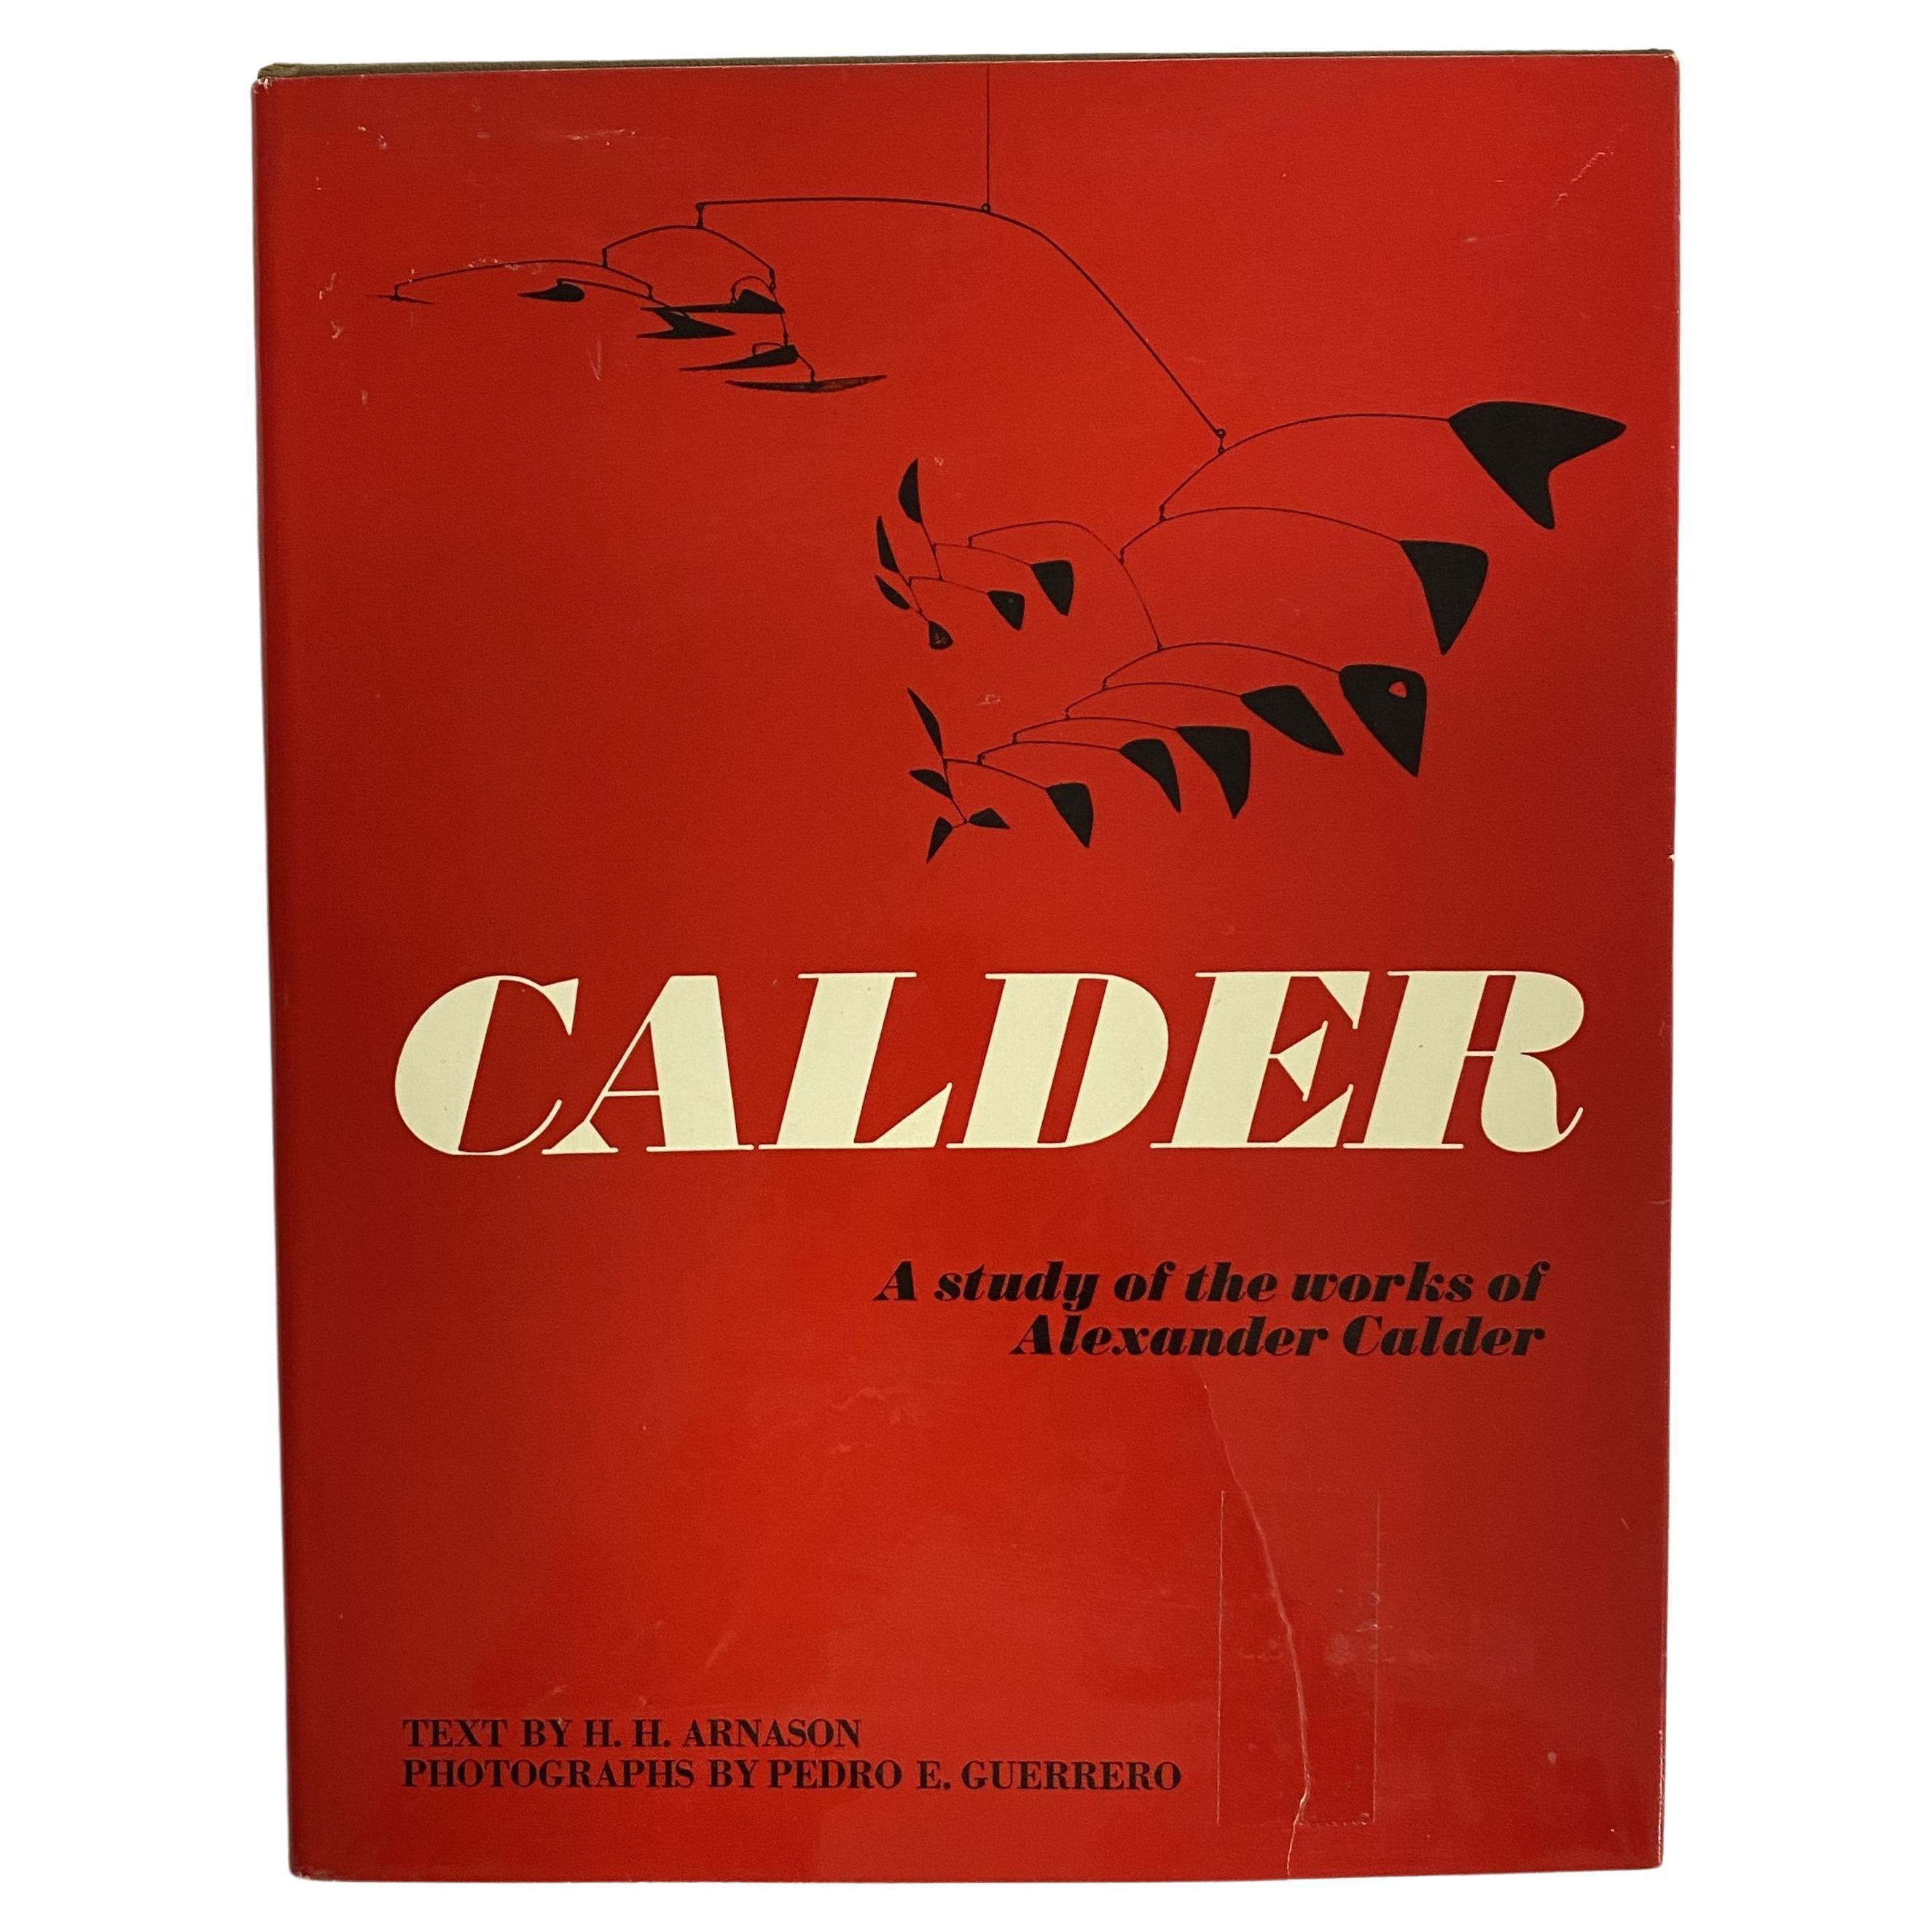 Calder: A Study of the Works of Alexander Calder by H. H. Arnason (Book) For Sale